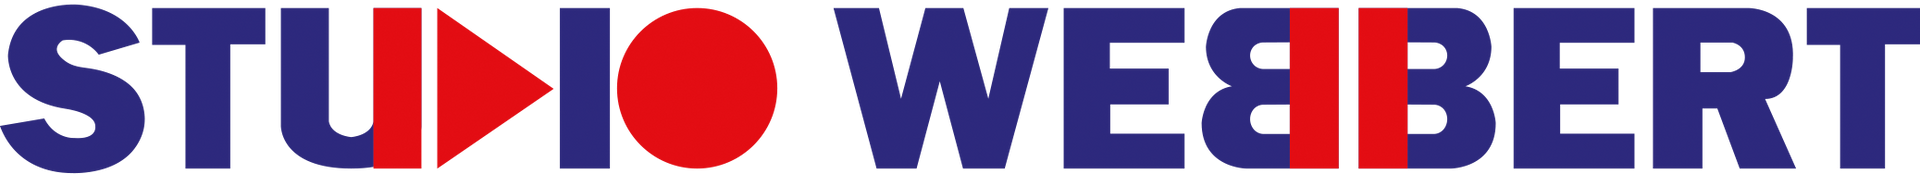 Studio-Webbert_logo